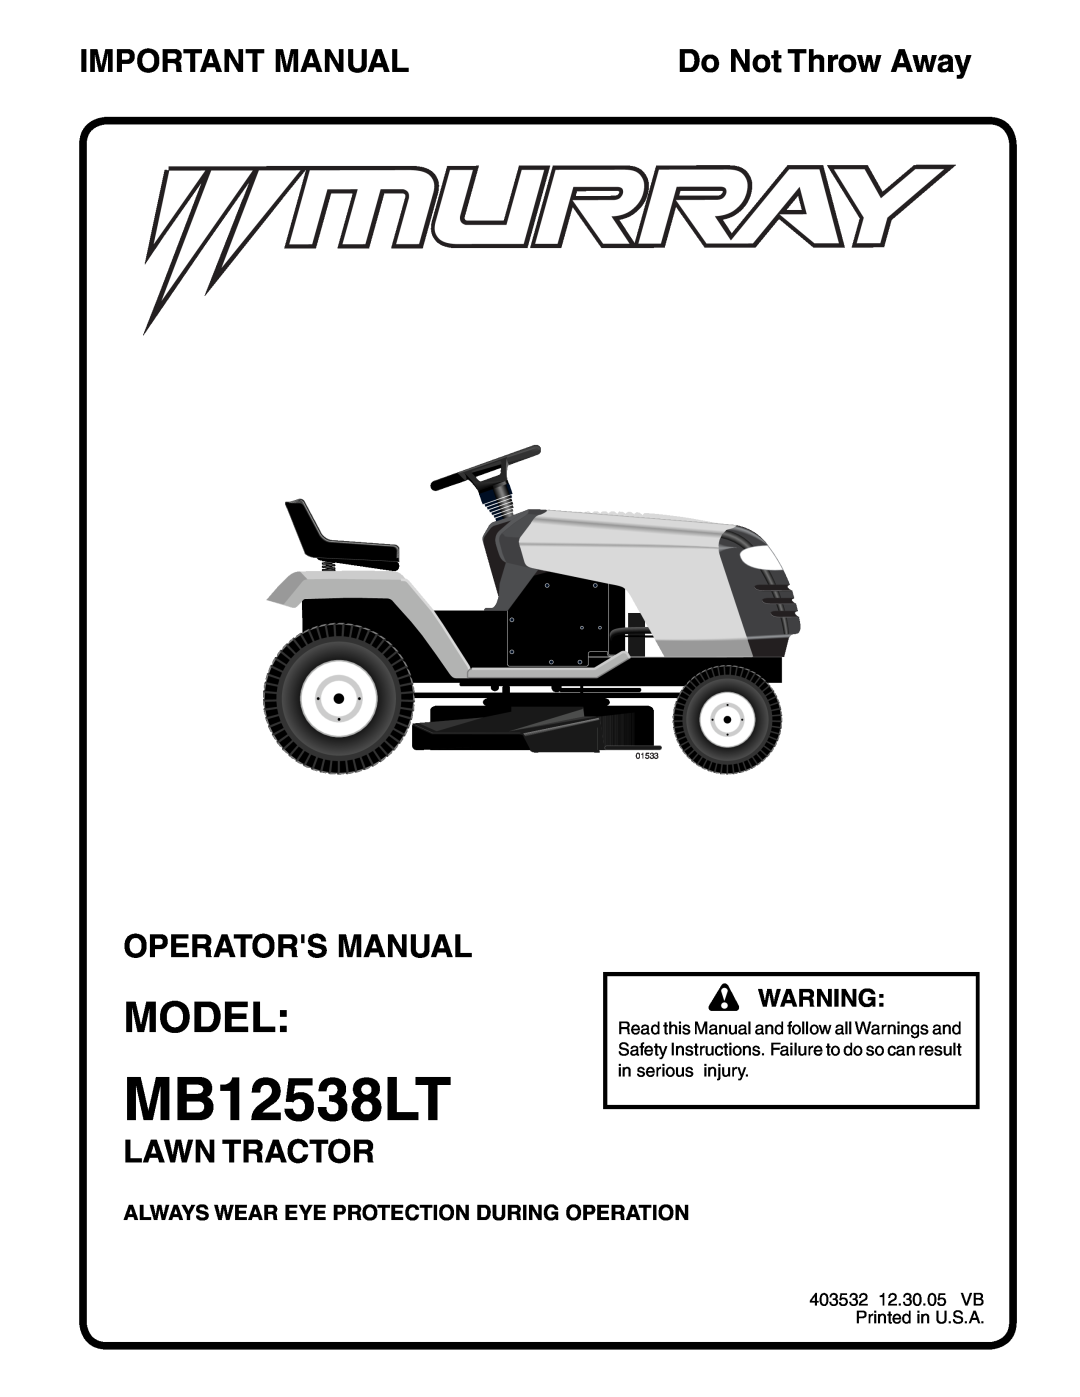 Murray MB12538LT manual Model, Important Manual, Operators Manual, Lawn Tractor, Do Not Throw Away, 01533 